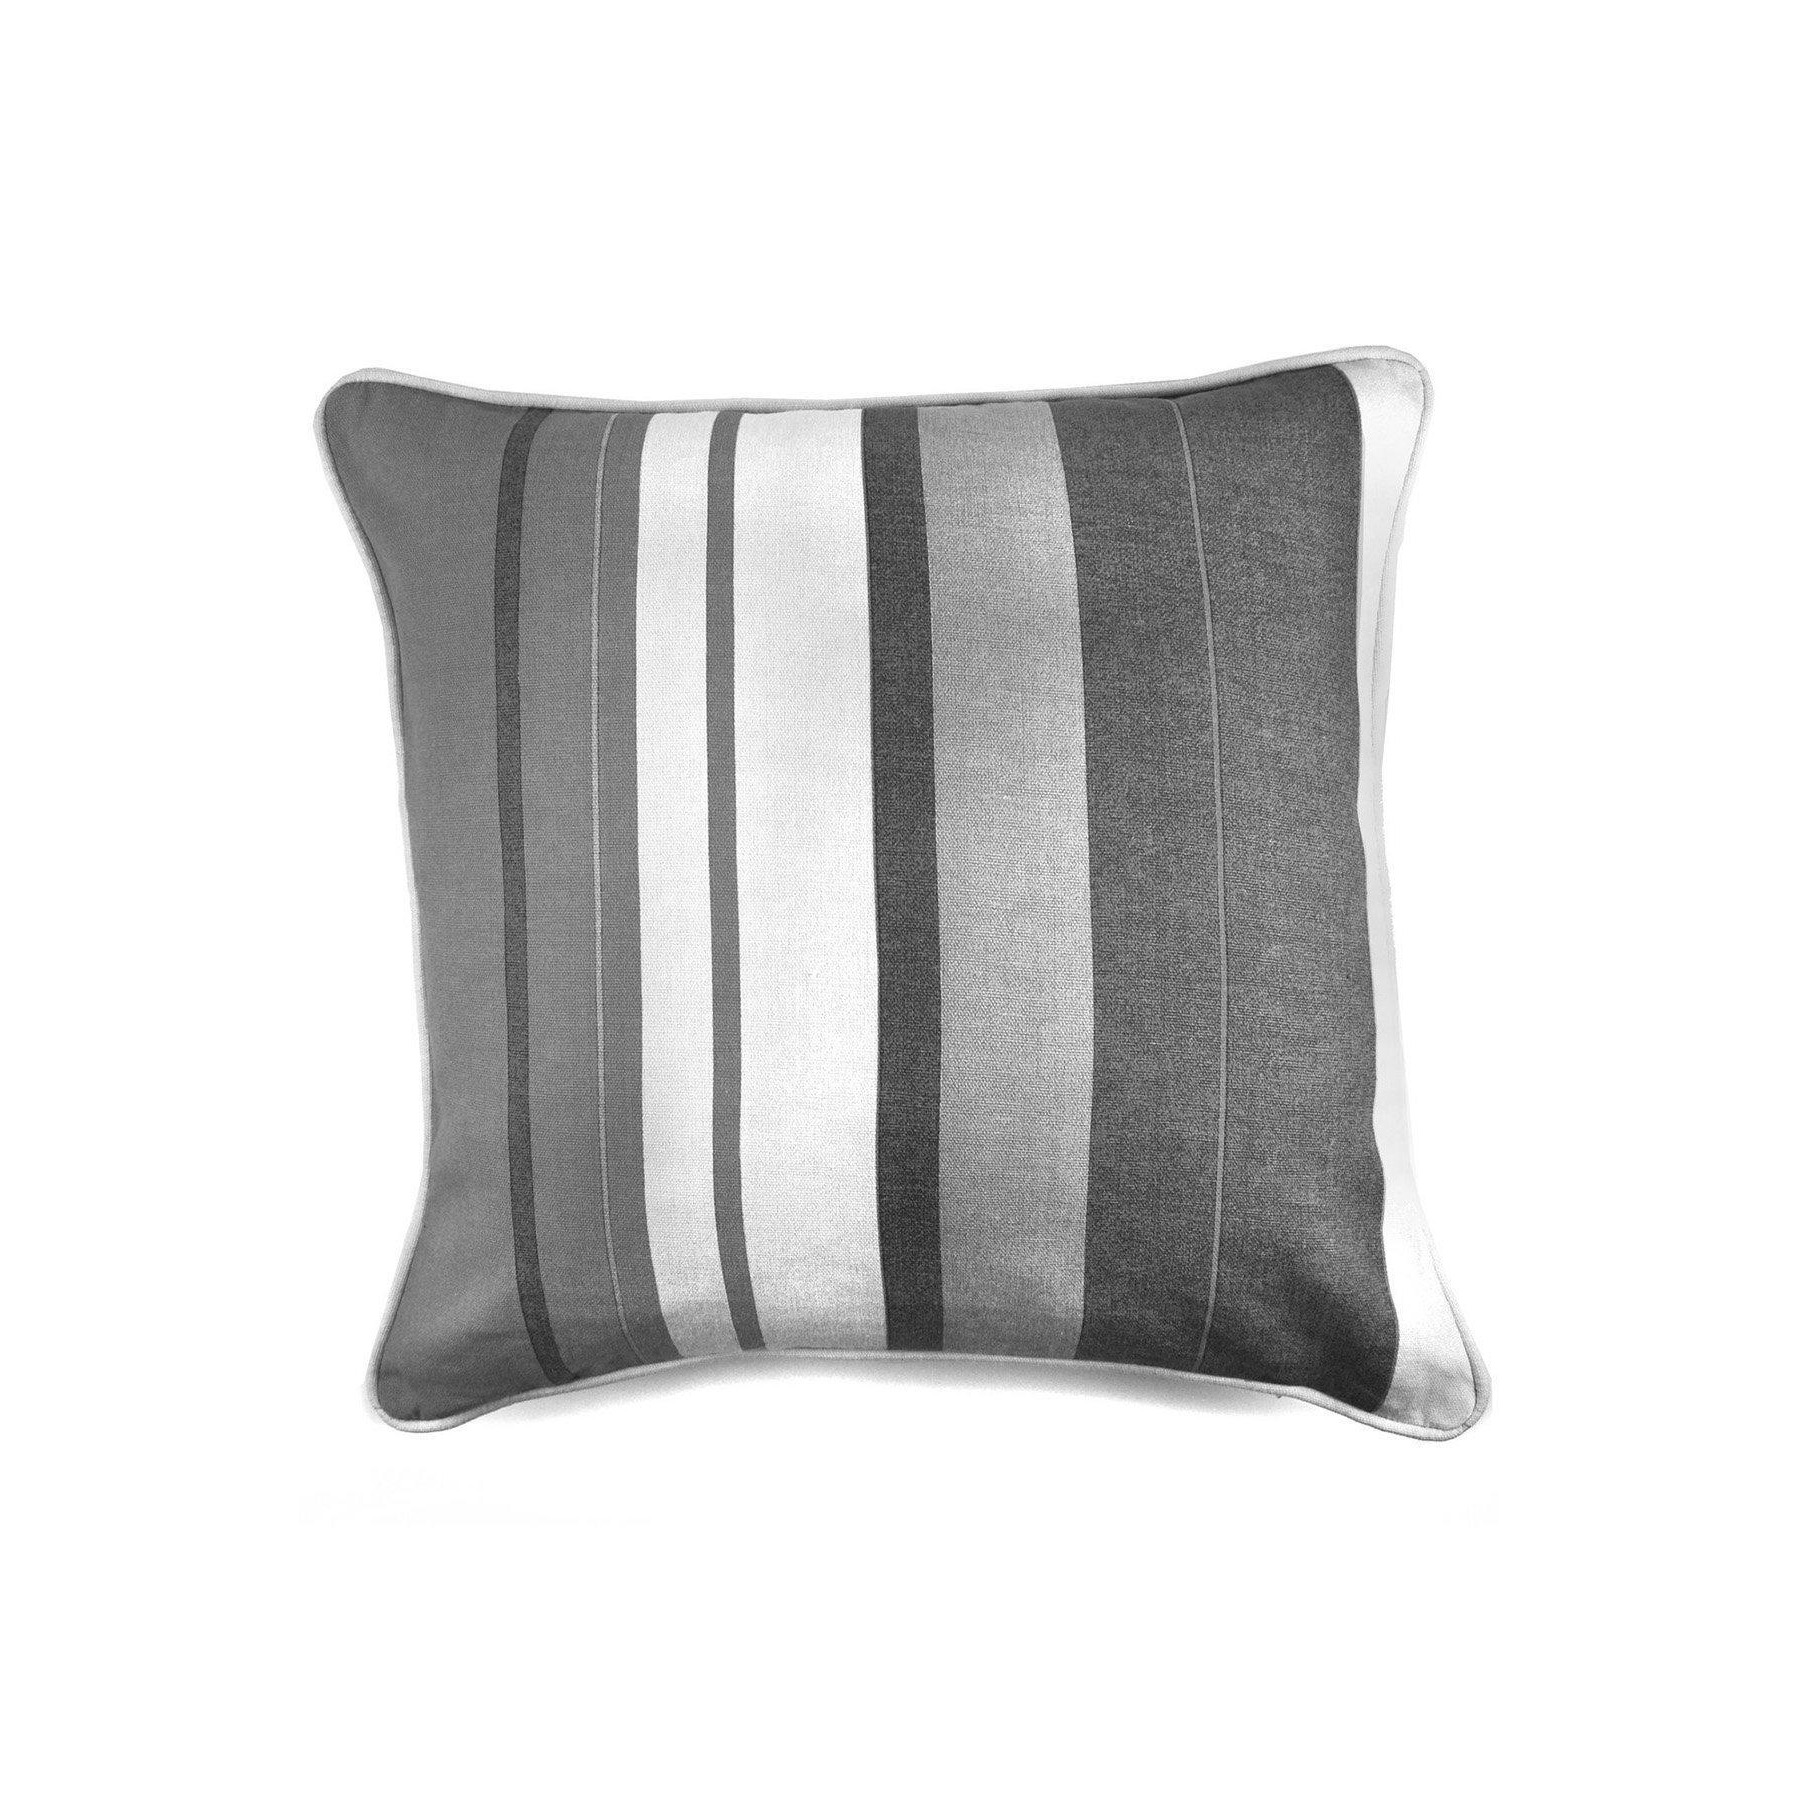 'Whitworth Stripe' Modern Striped Filled Cushion 100% Cotton - image 1